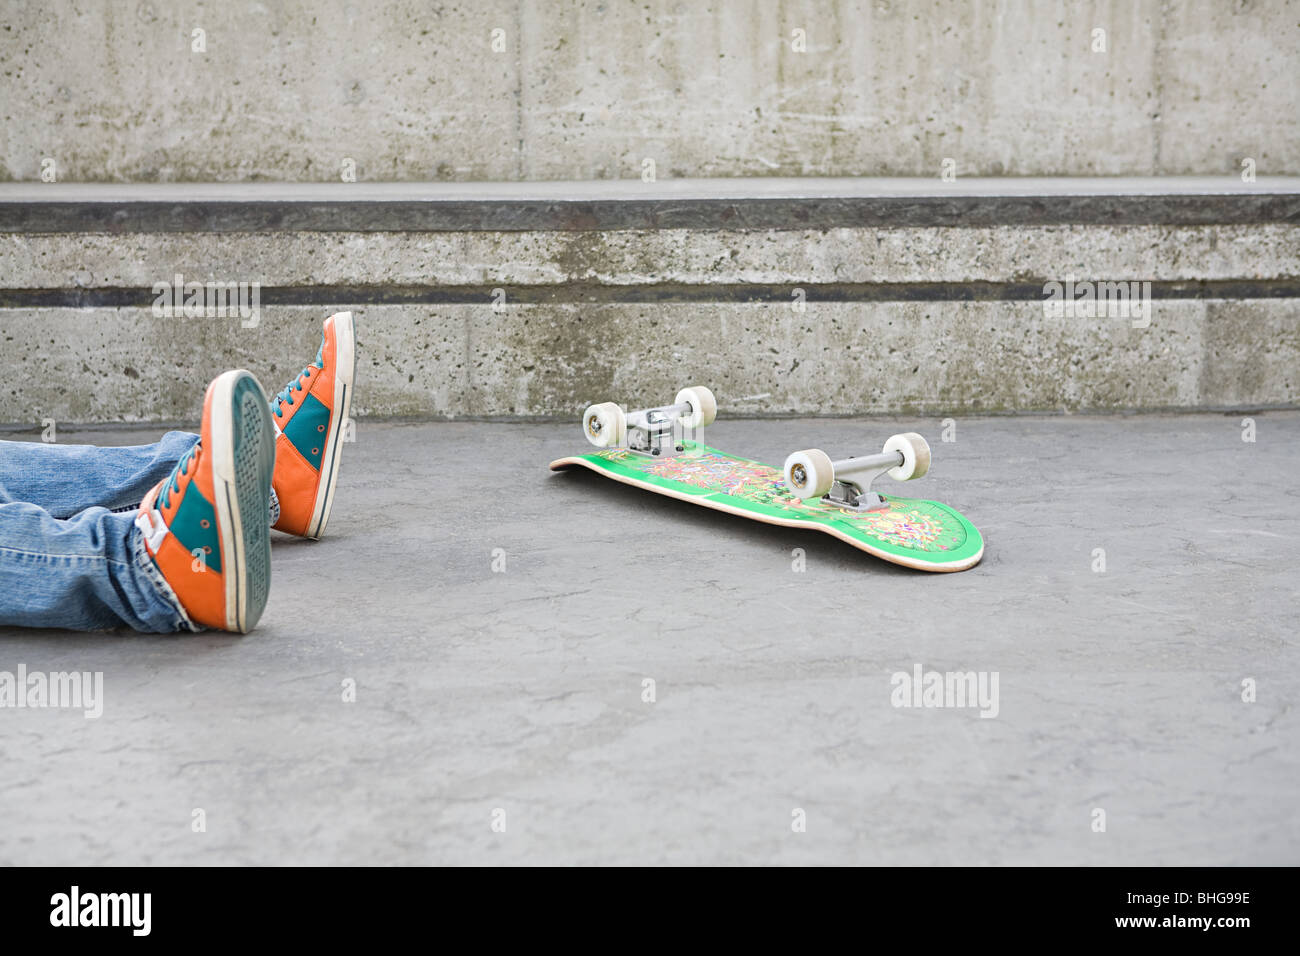 Feet of teenager who has fallen off skateboard Stock Photo - Alamy